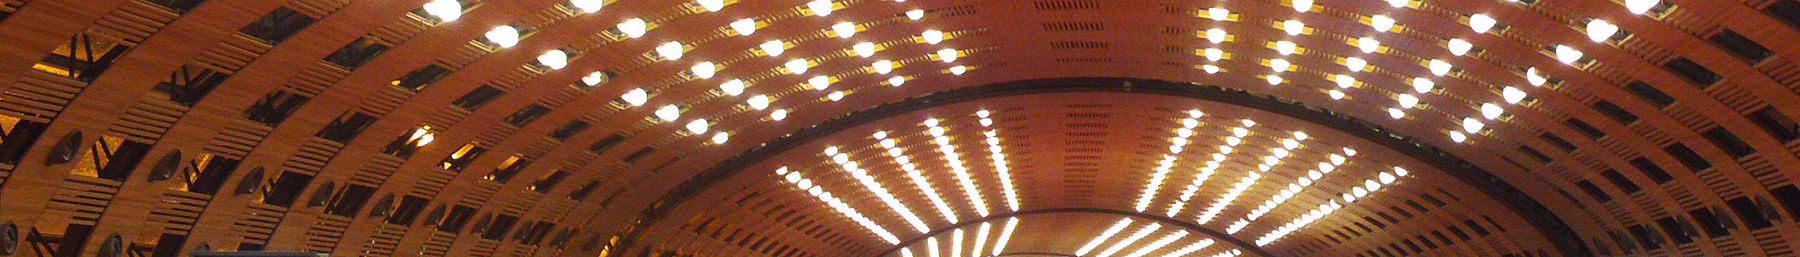 Wikivoyage CDG Banner Terminal 2E ceiling.jpg